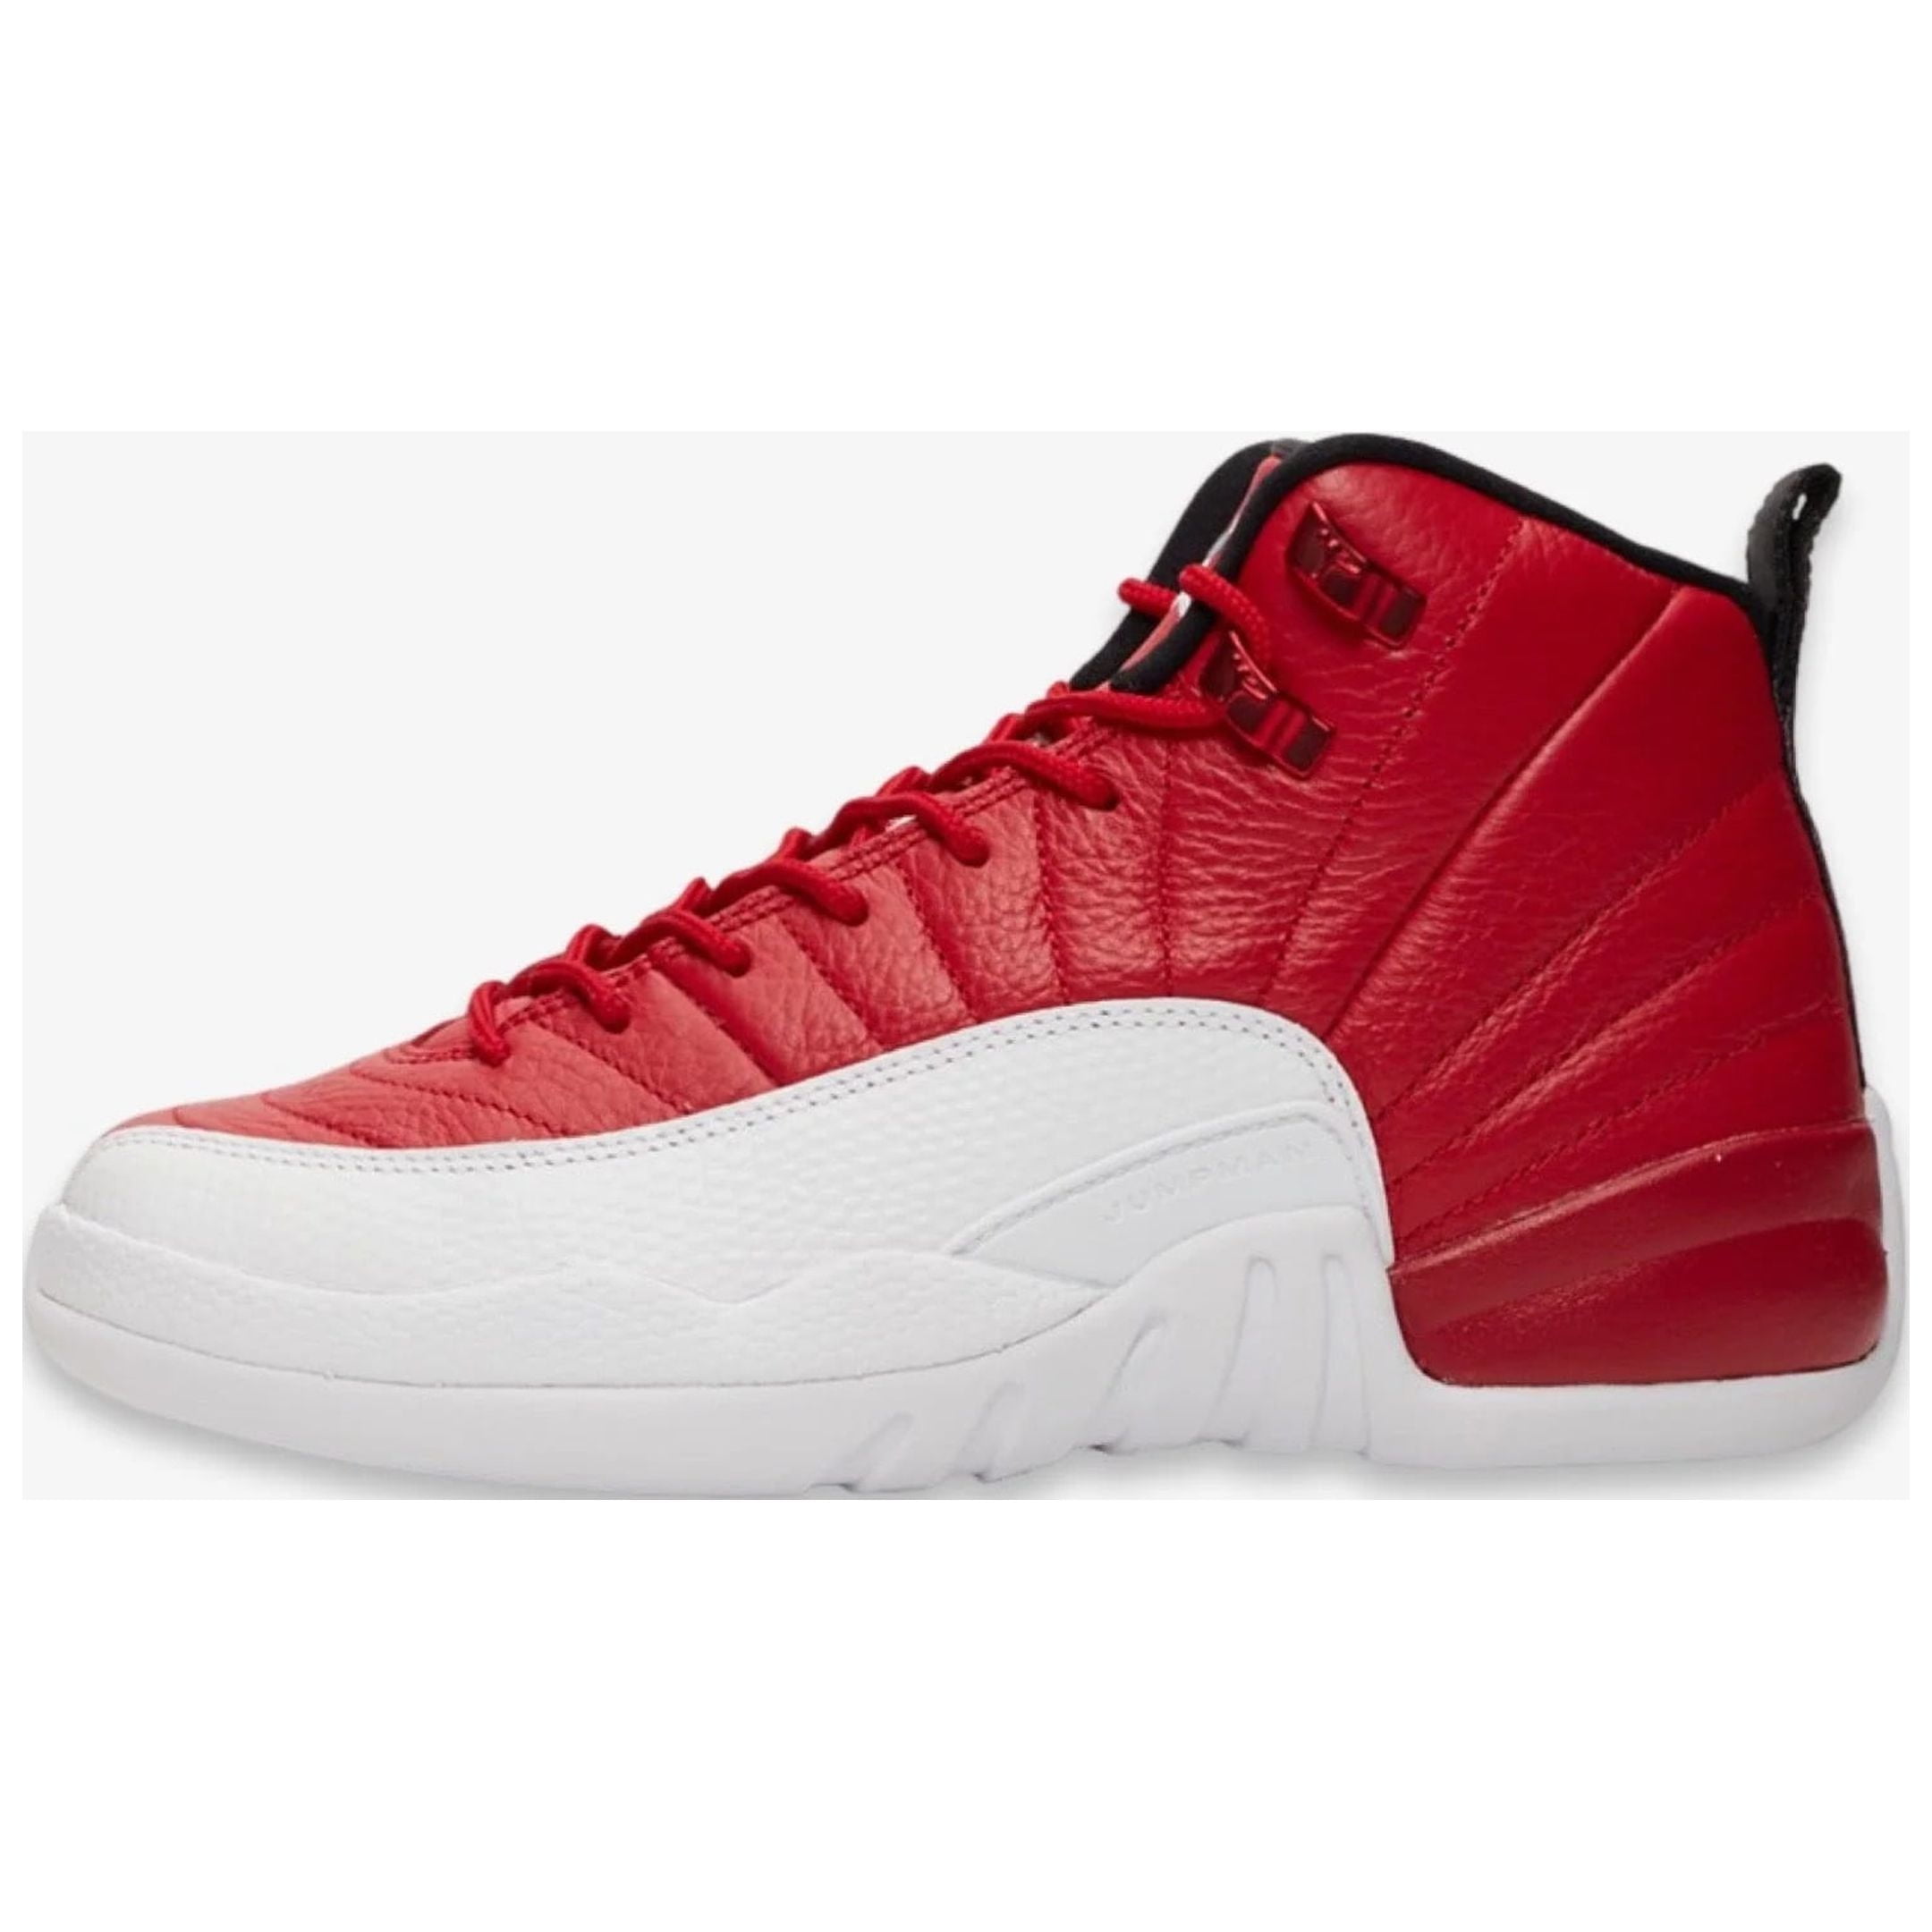 Nike Air Jordan 12 Retro Gym Red Size 5Y White Black 153265-600